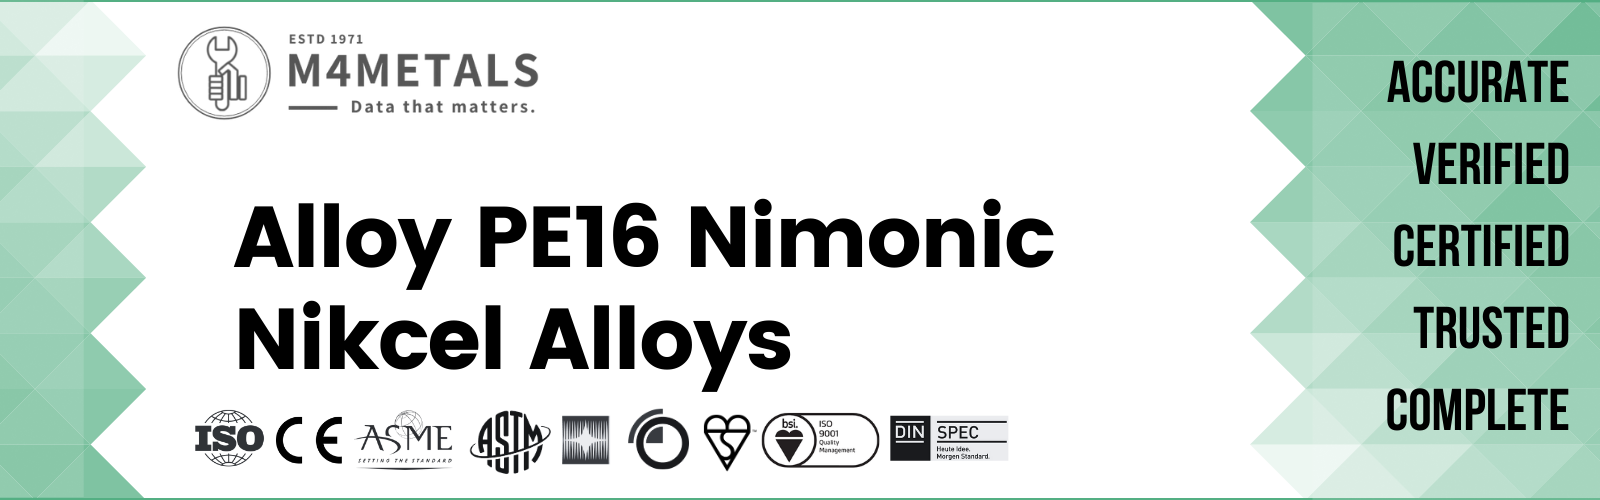 Nimonic Alloy PE16